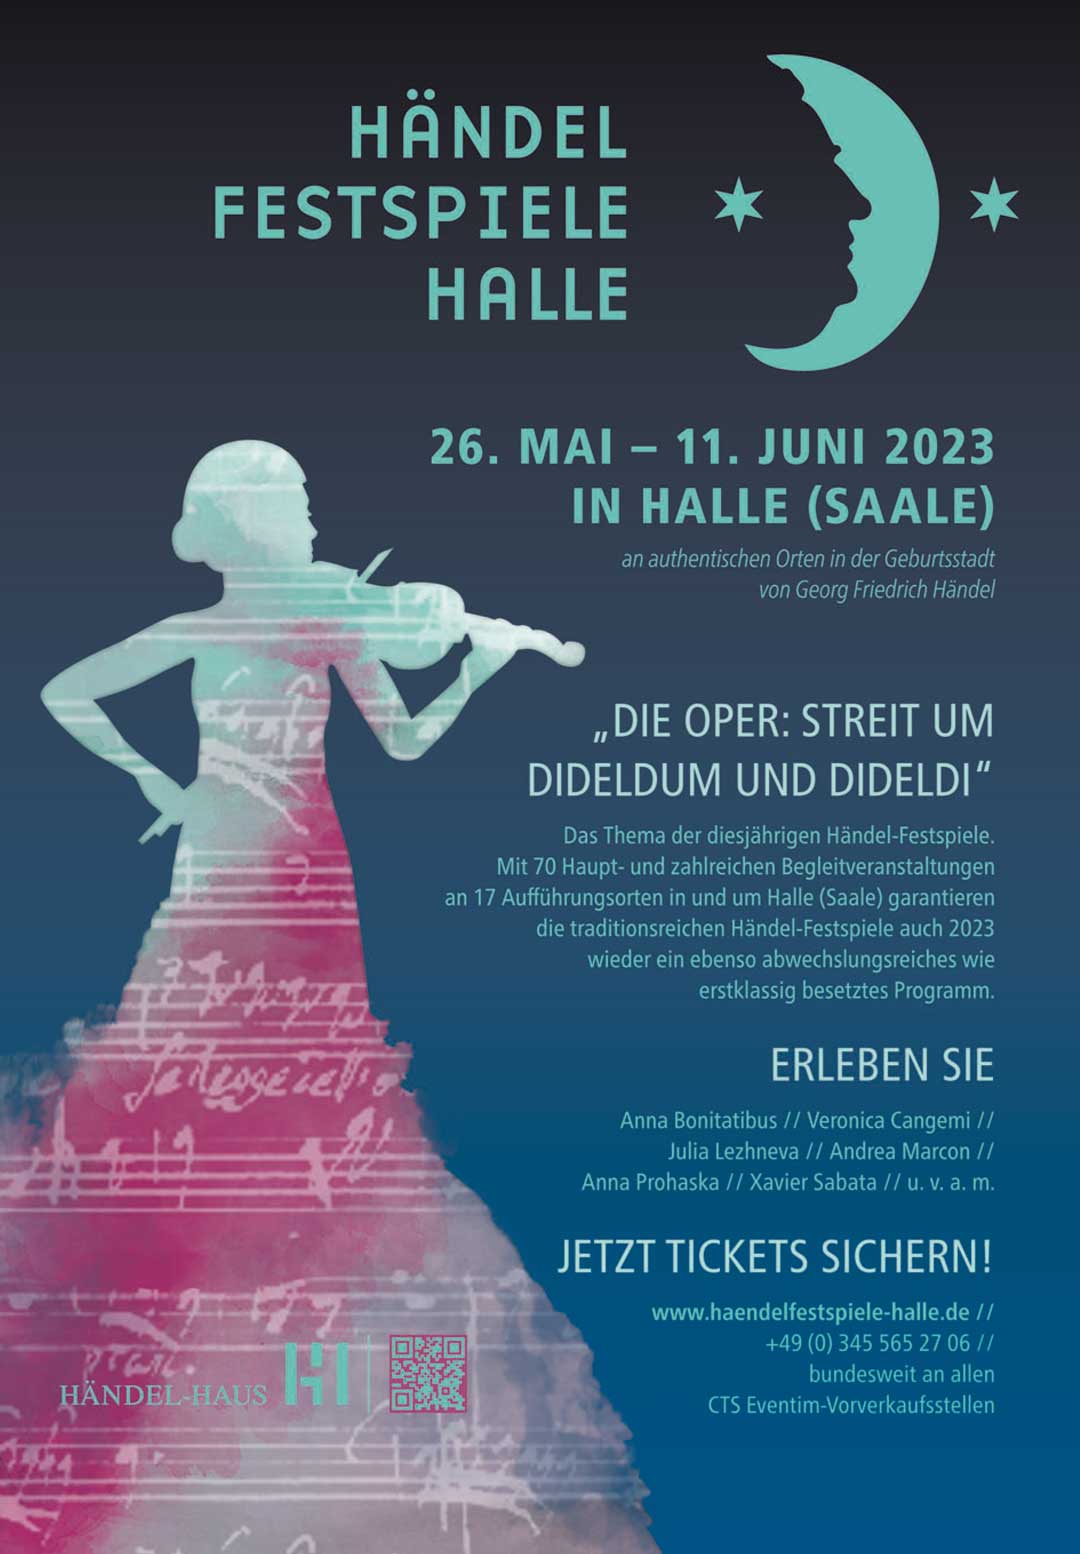 Die Händel-Festspiele in Halle